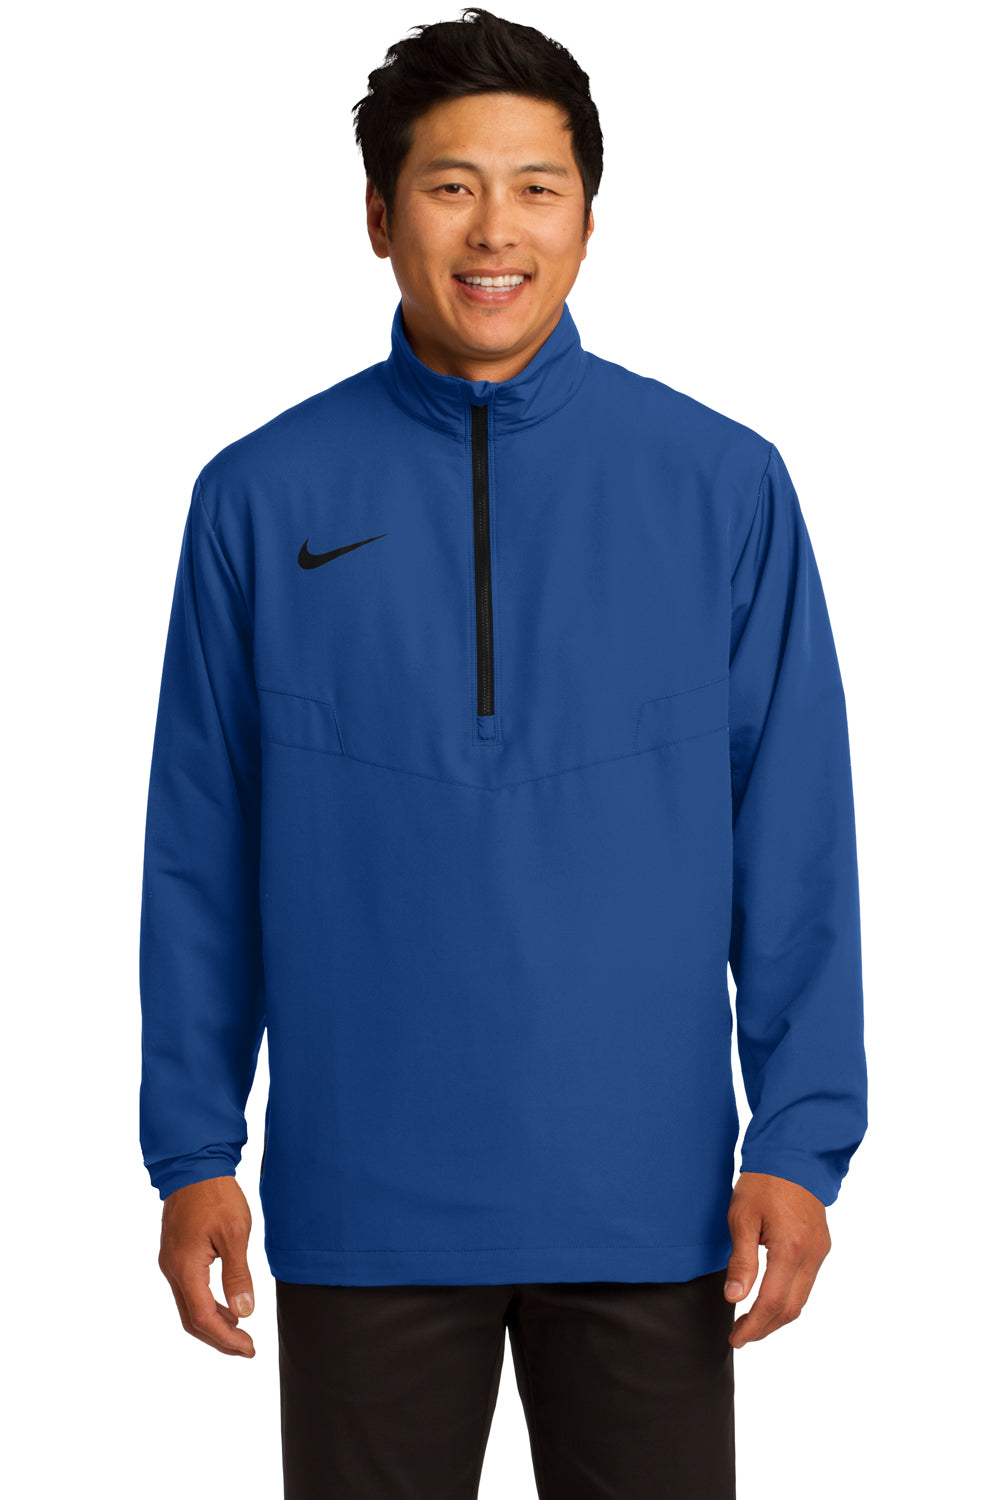 Nike 578675 Mens 1/4 Zip Wind Jacket Royal Blue Front